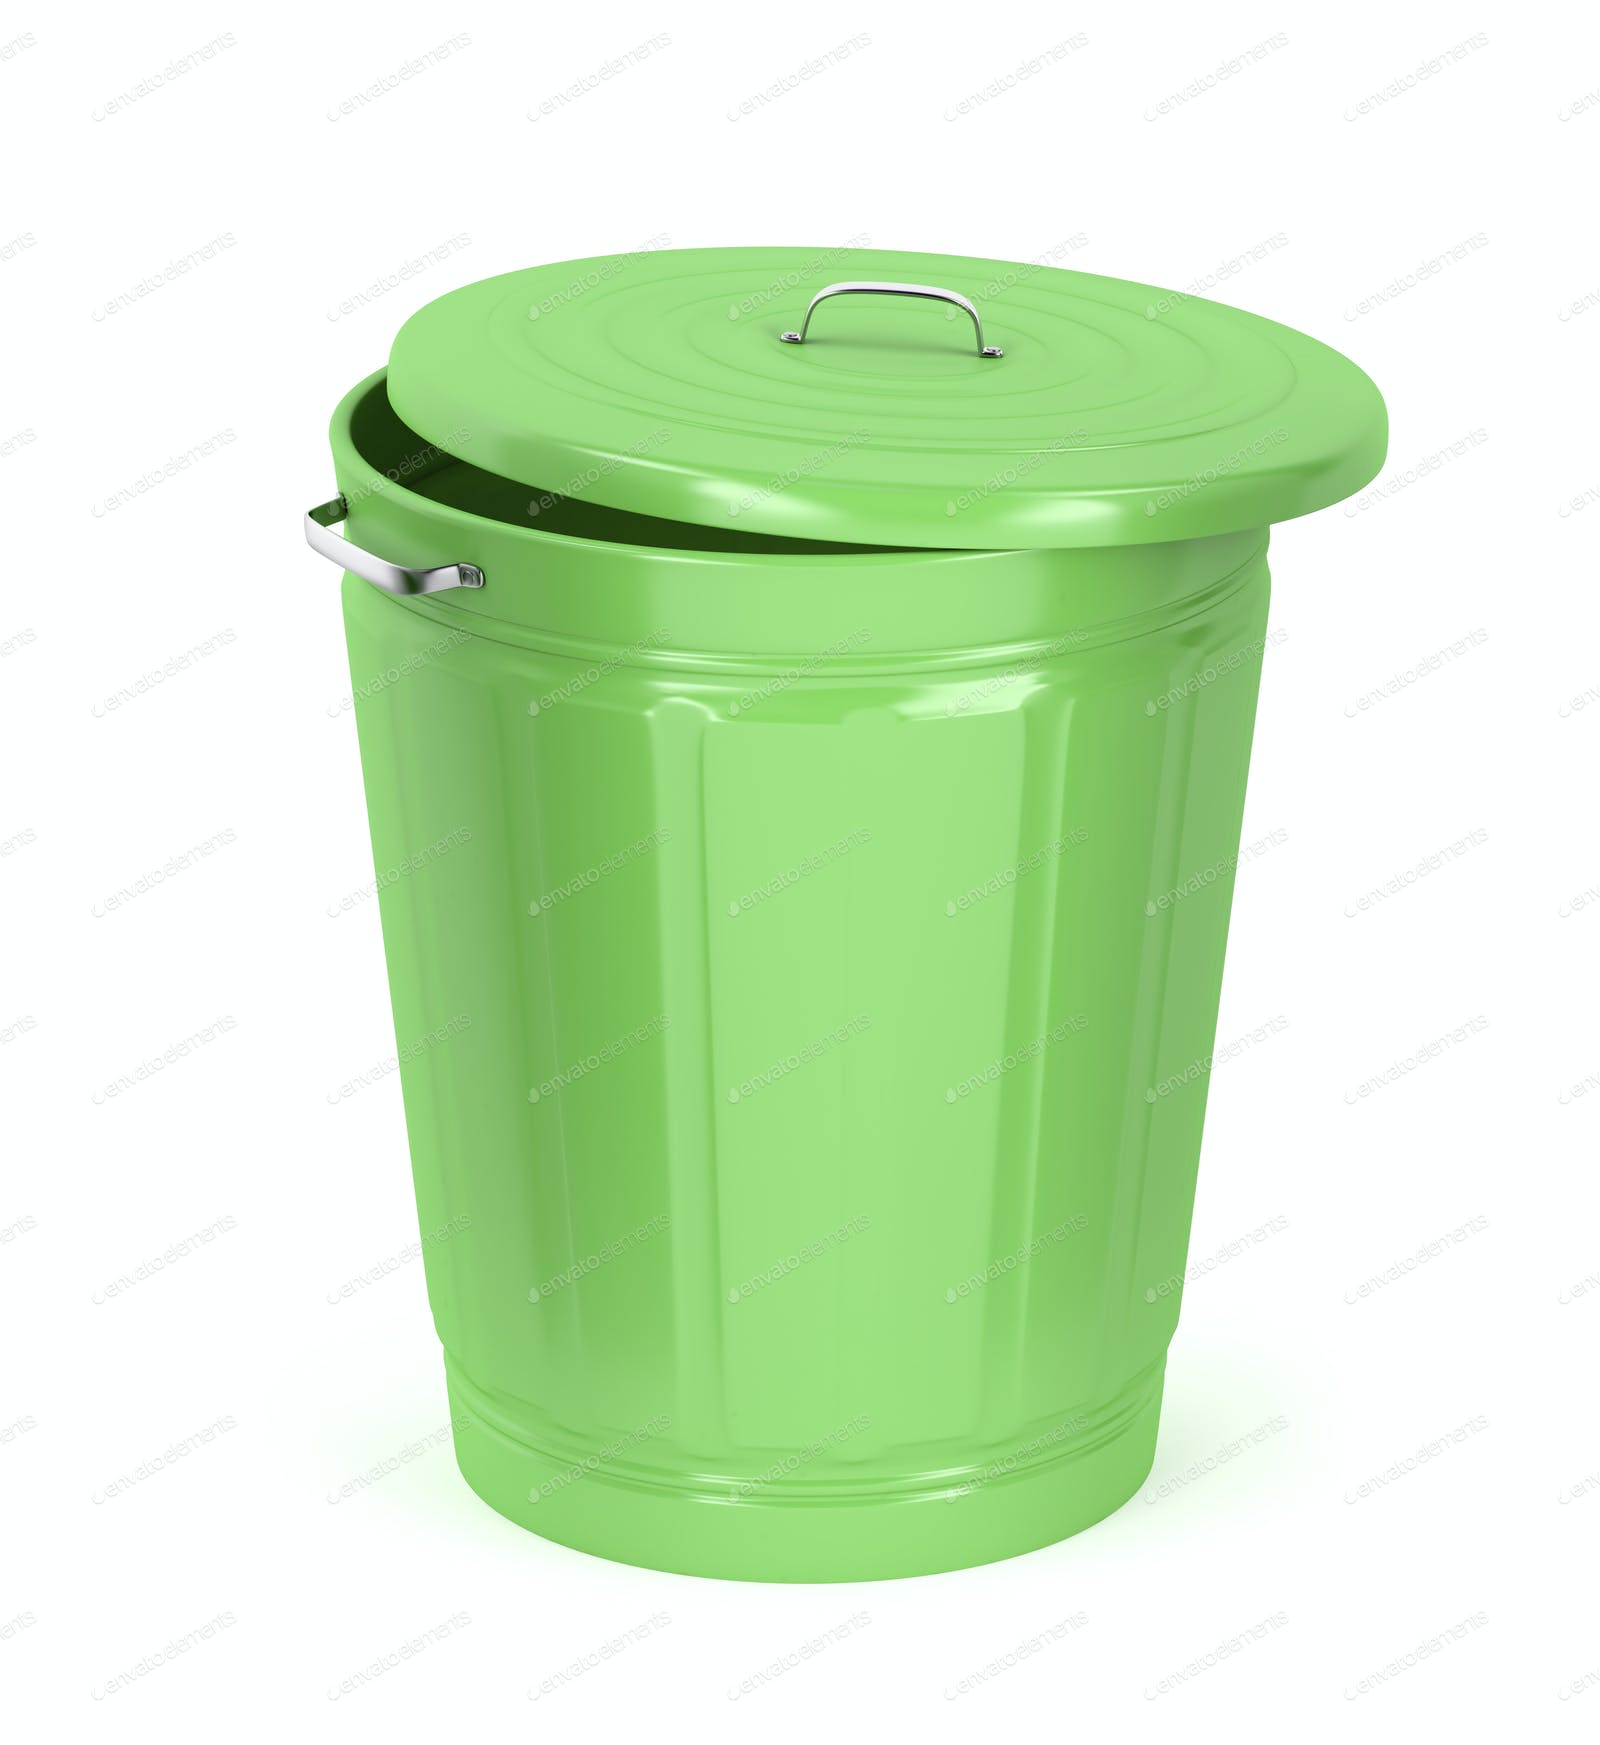 Green+metal+trash+can.jpg